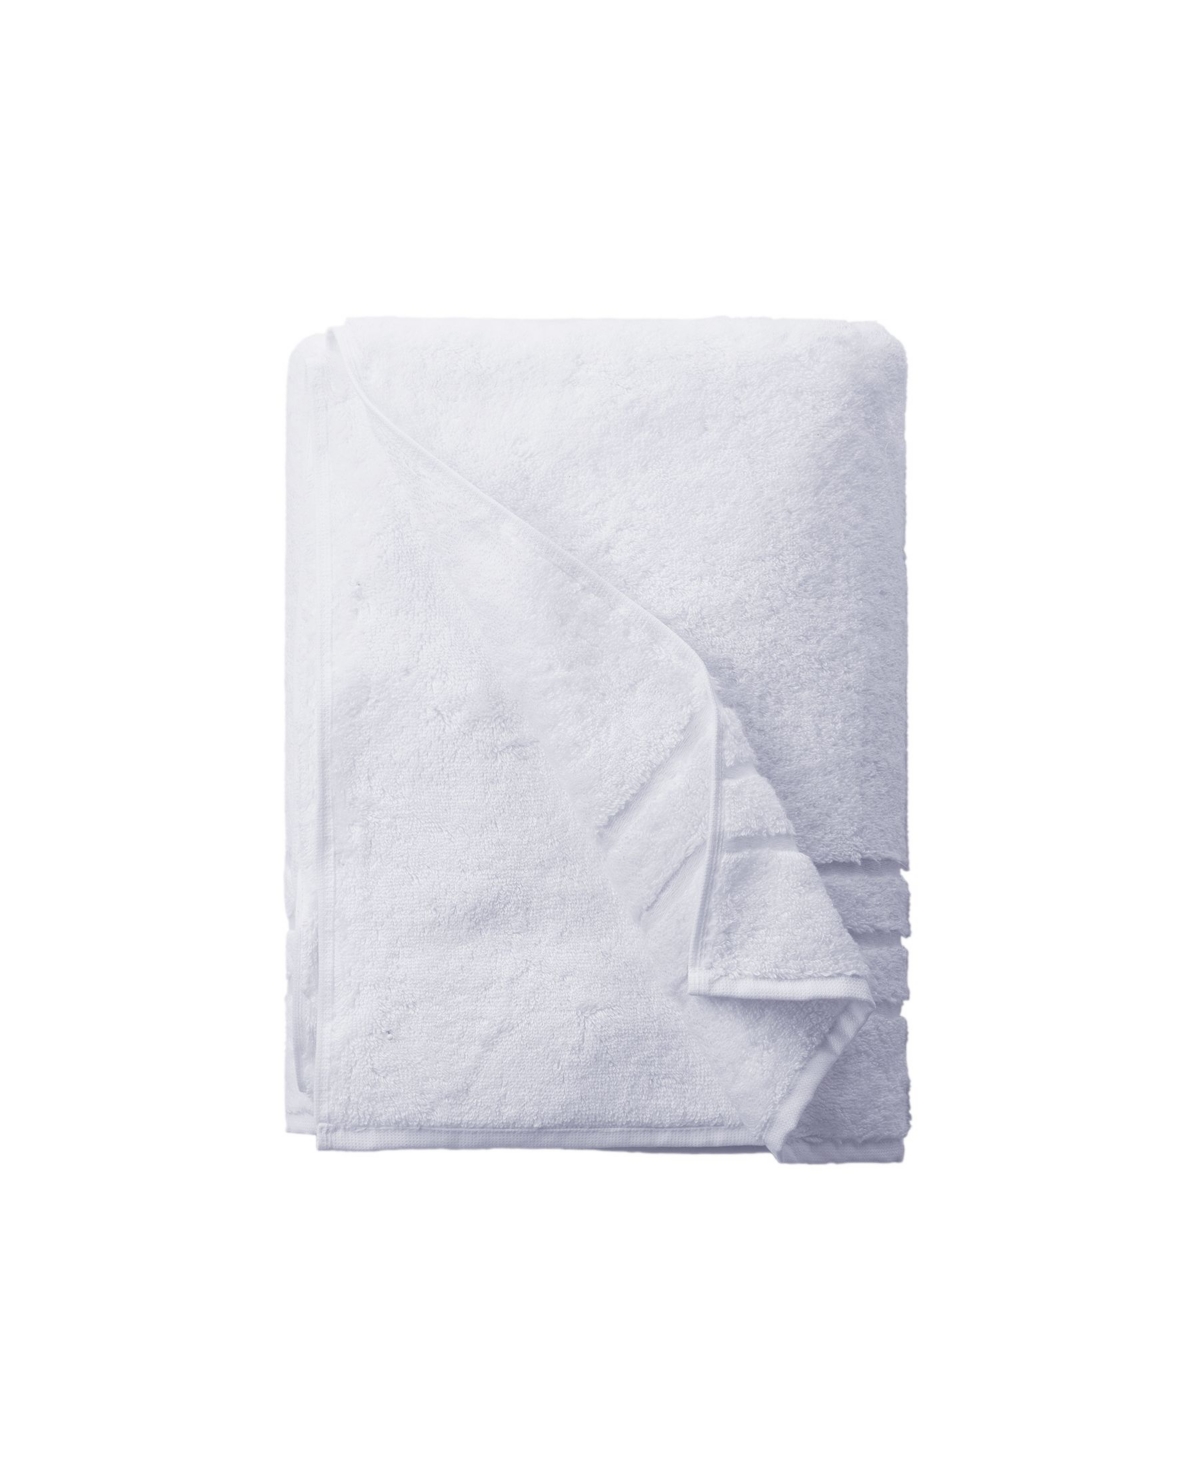 70" x 40" Bath Sheet Bedding